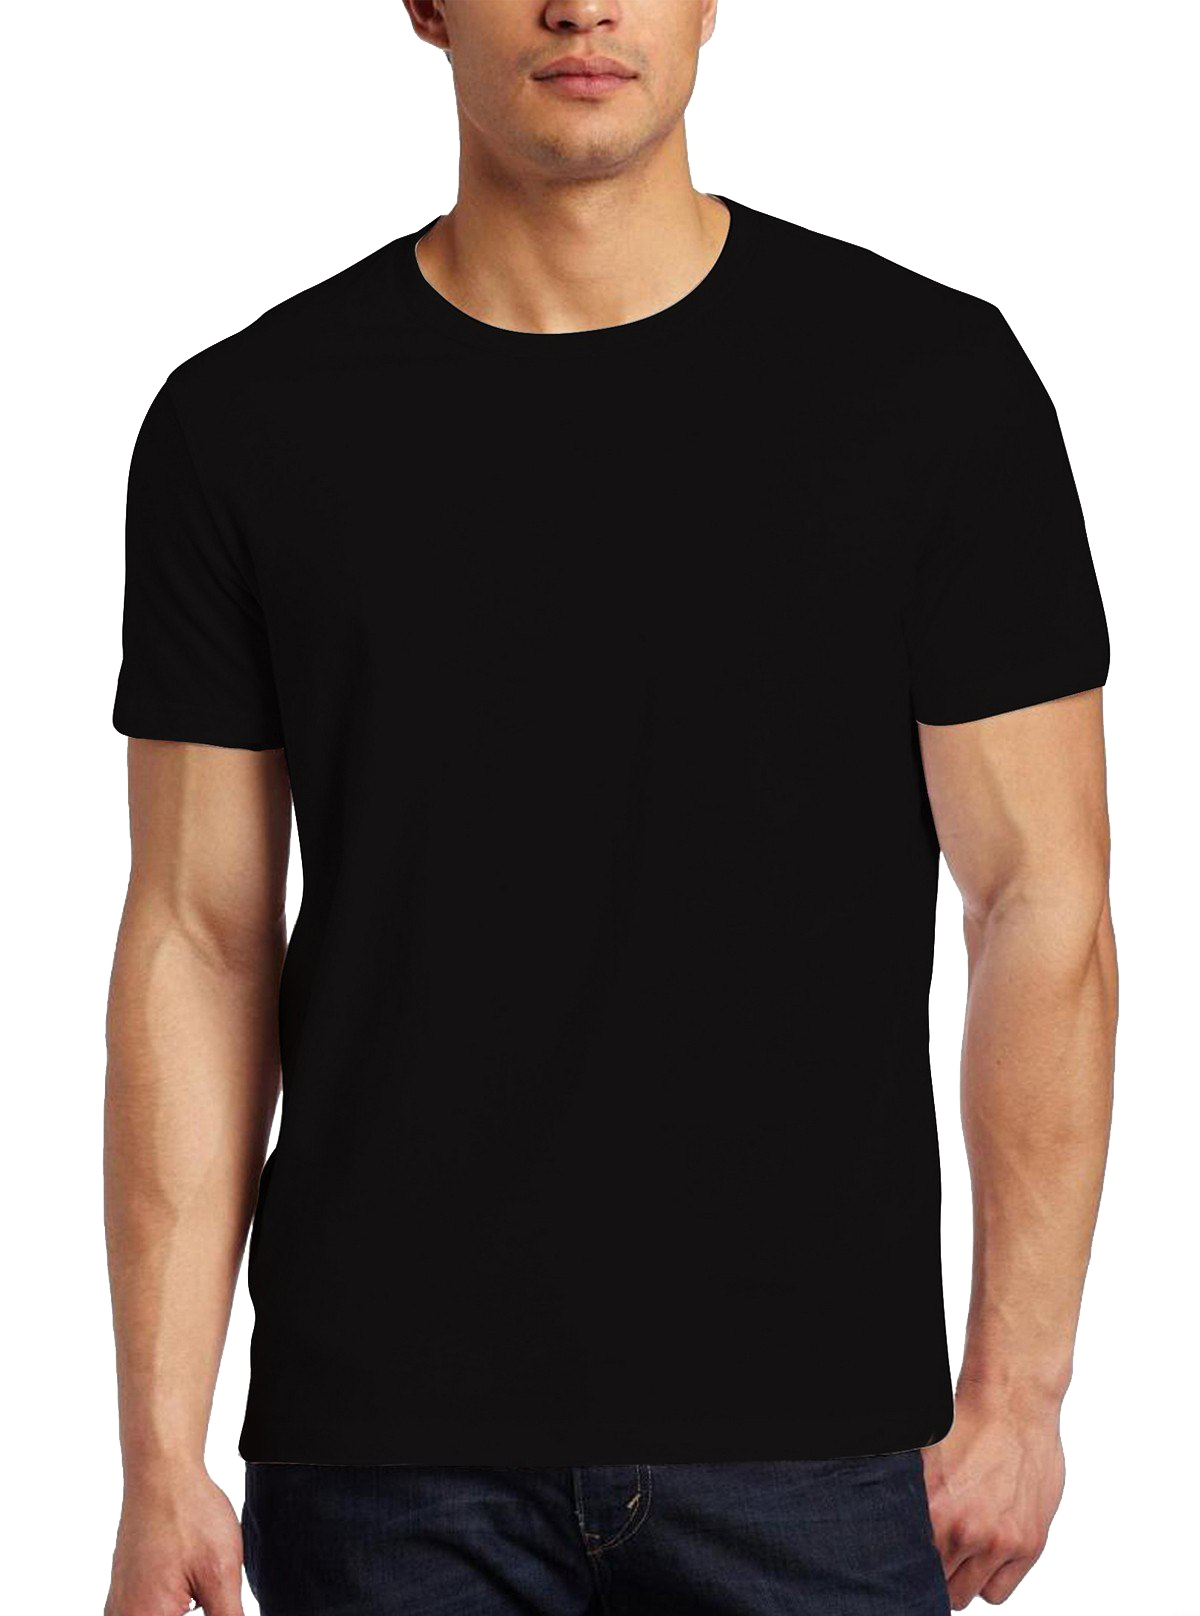 Cotton Black T-Shirt PNG Download Image